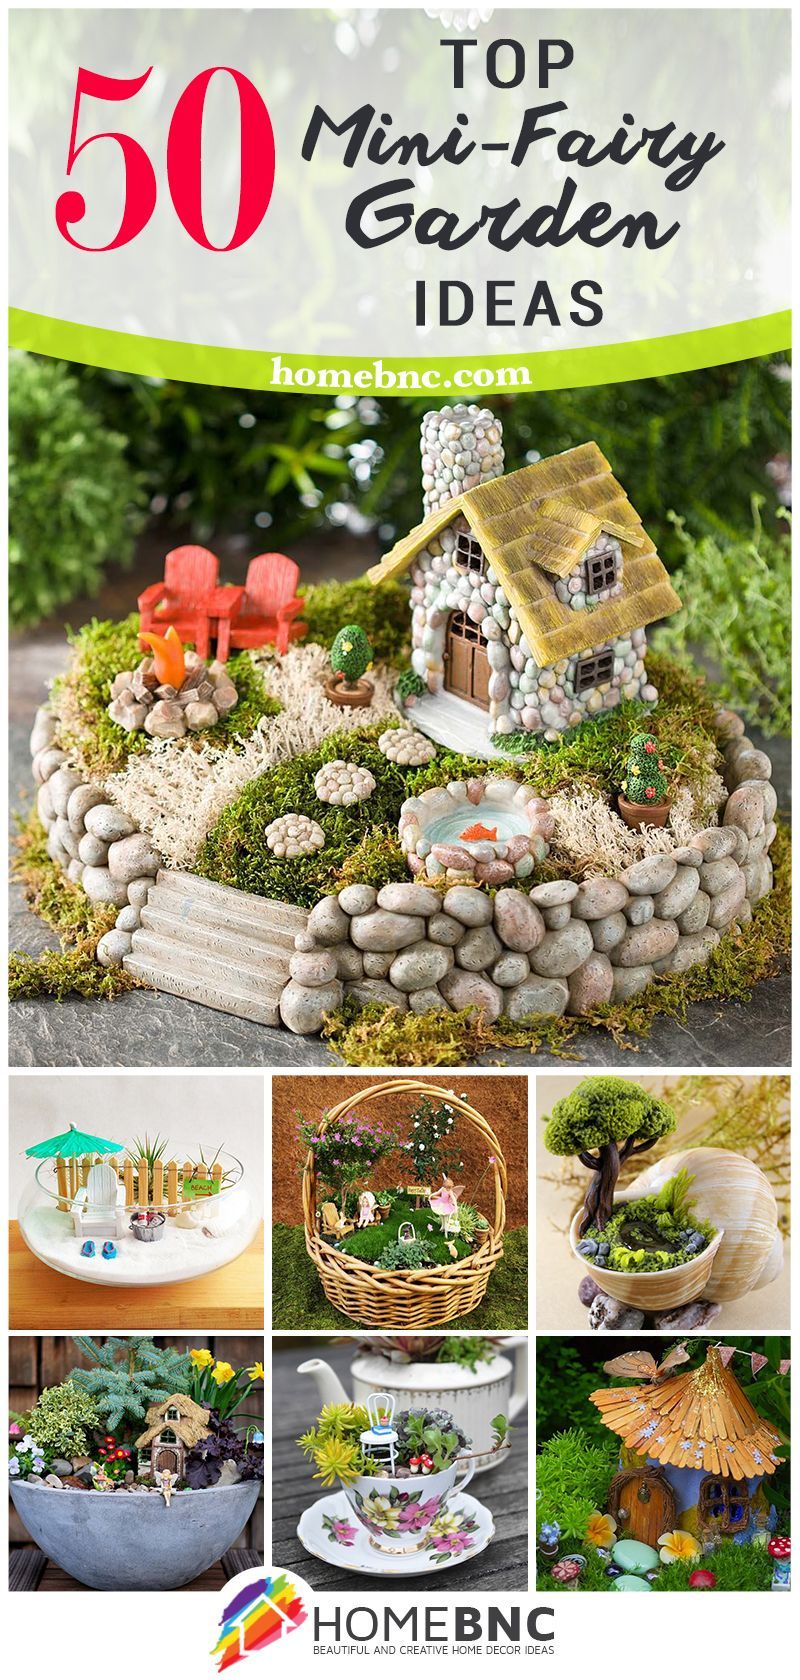 Take Your Pick! The Top 50 Mini-Fairy Garden Design Ideas